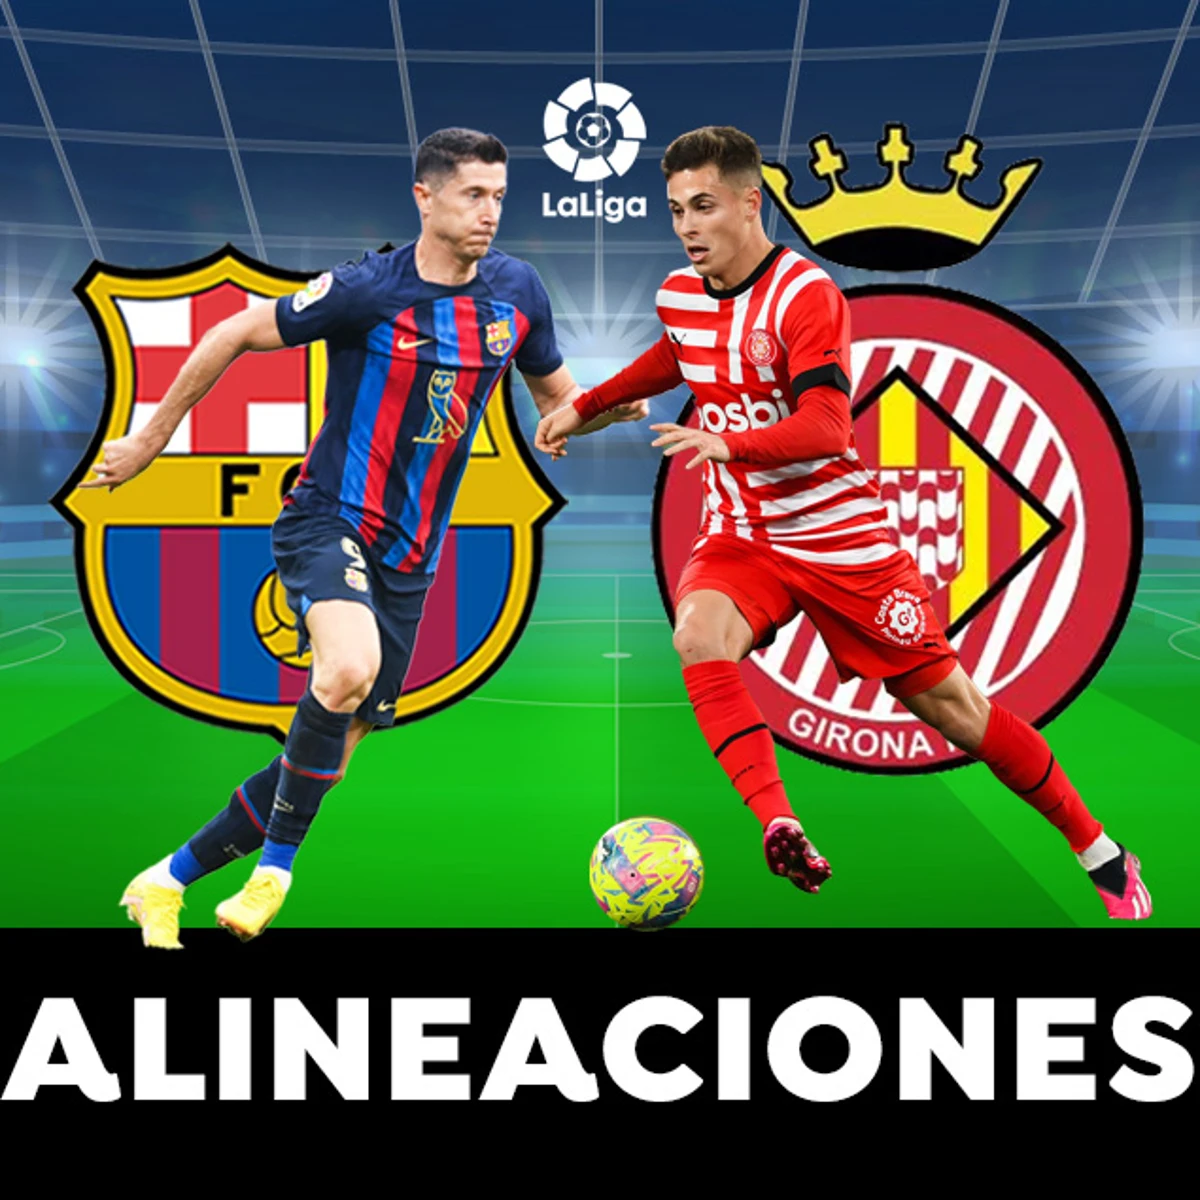 Alineacions de: futbol club barcelona - girona fc